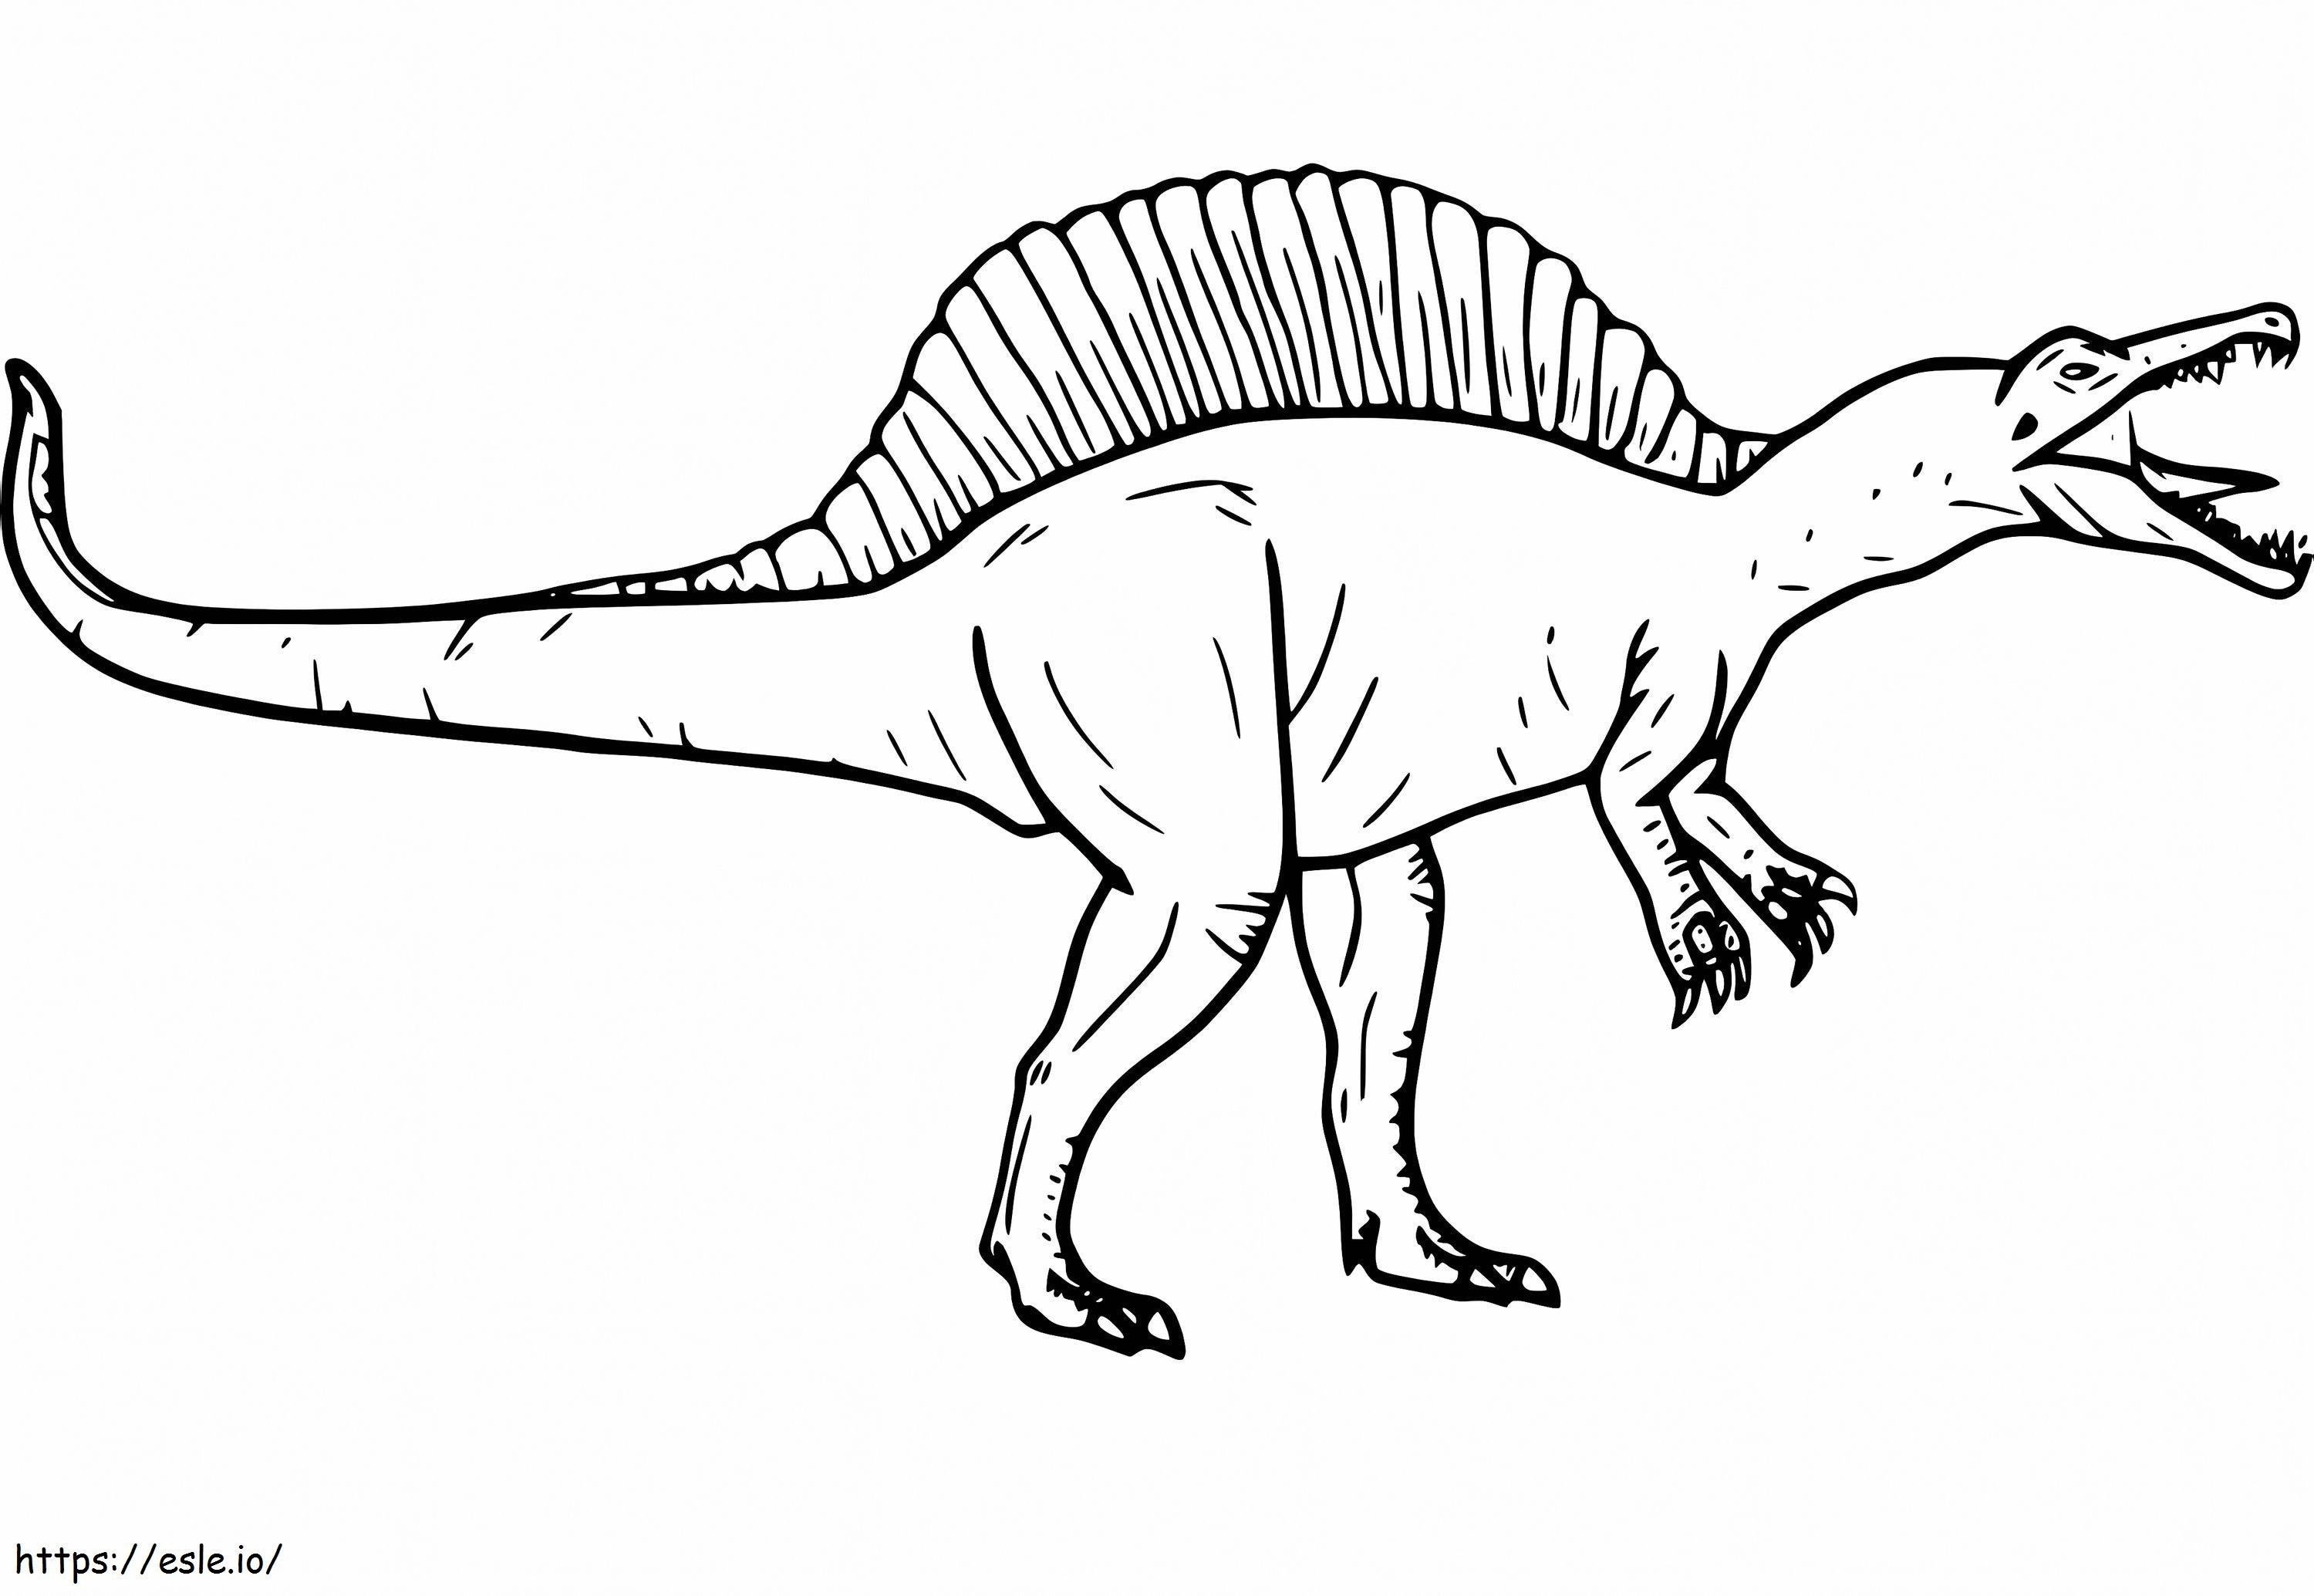 Angry Spinosaurus coloring page